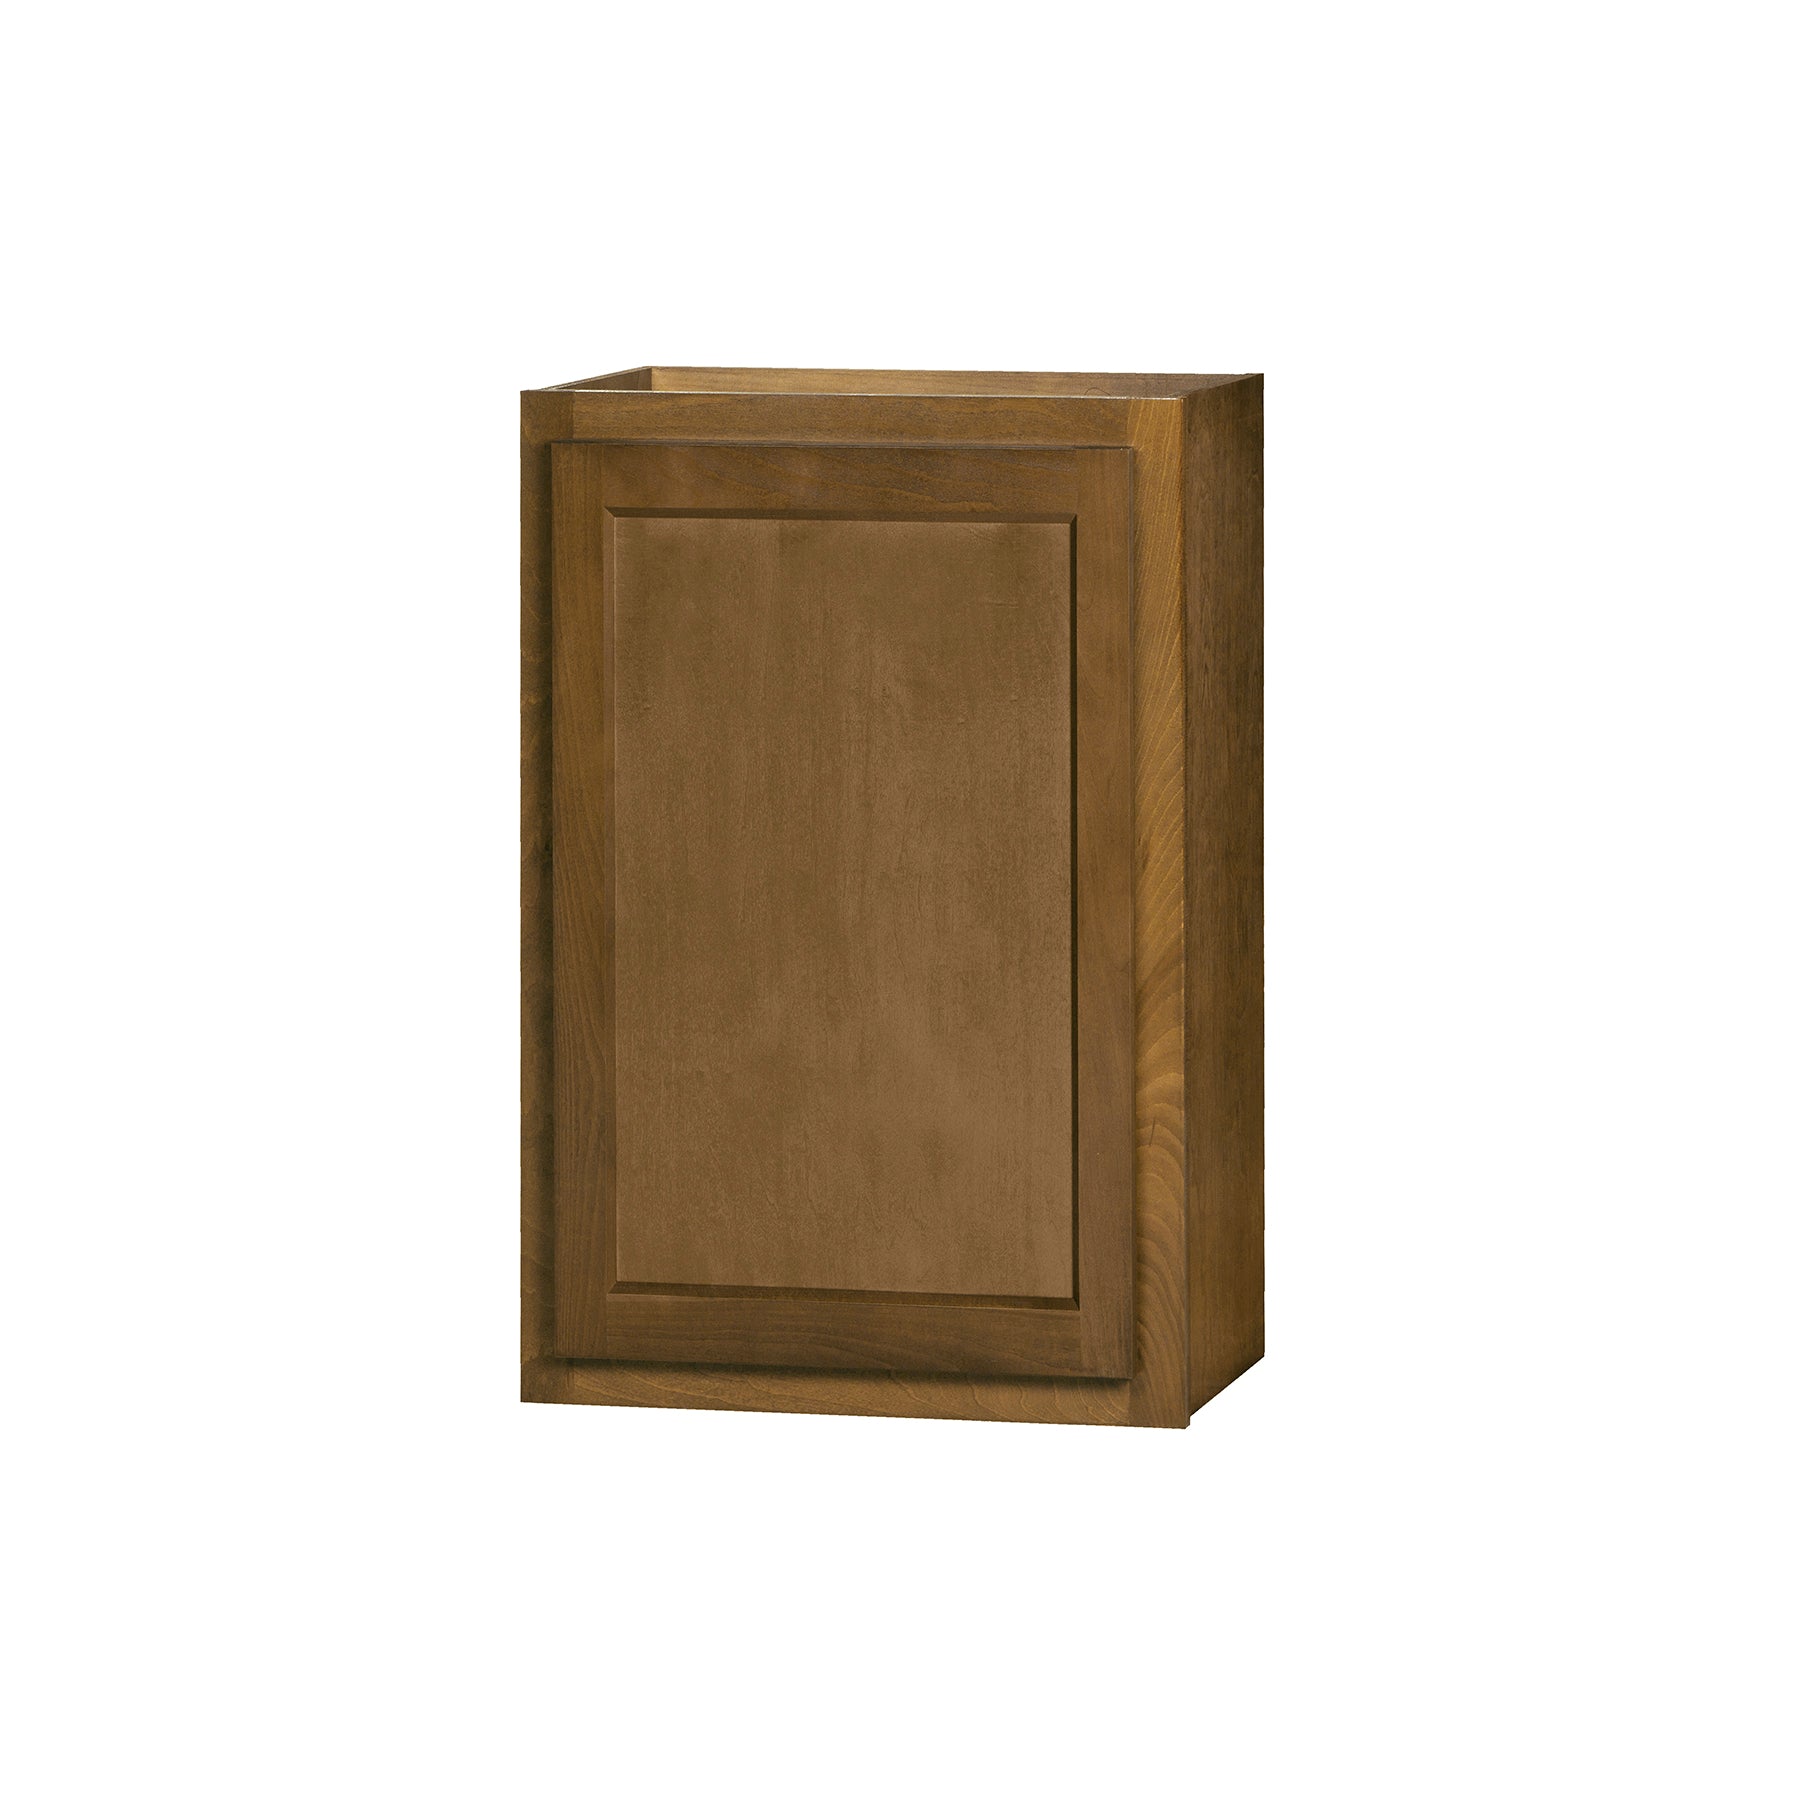 36 inch Wall Cabinets - Warmwood Shaker - 24 Inch W x 36 Inch H x 12 Inch D